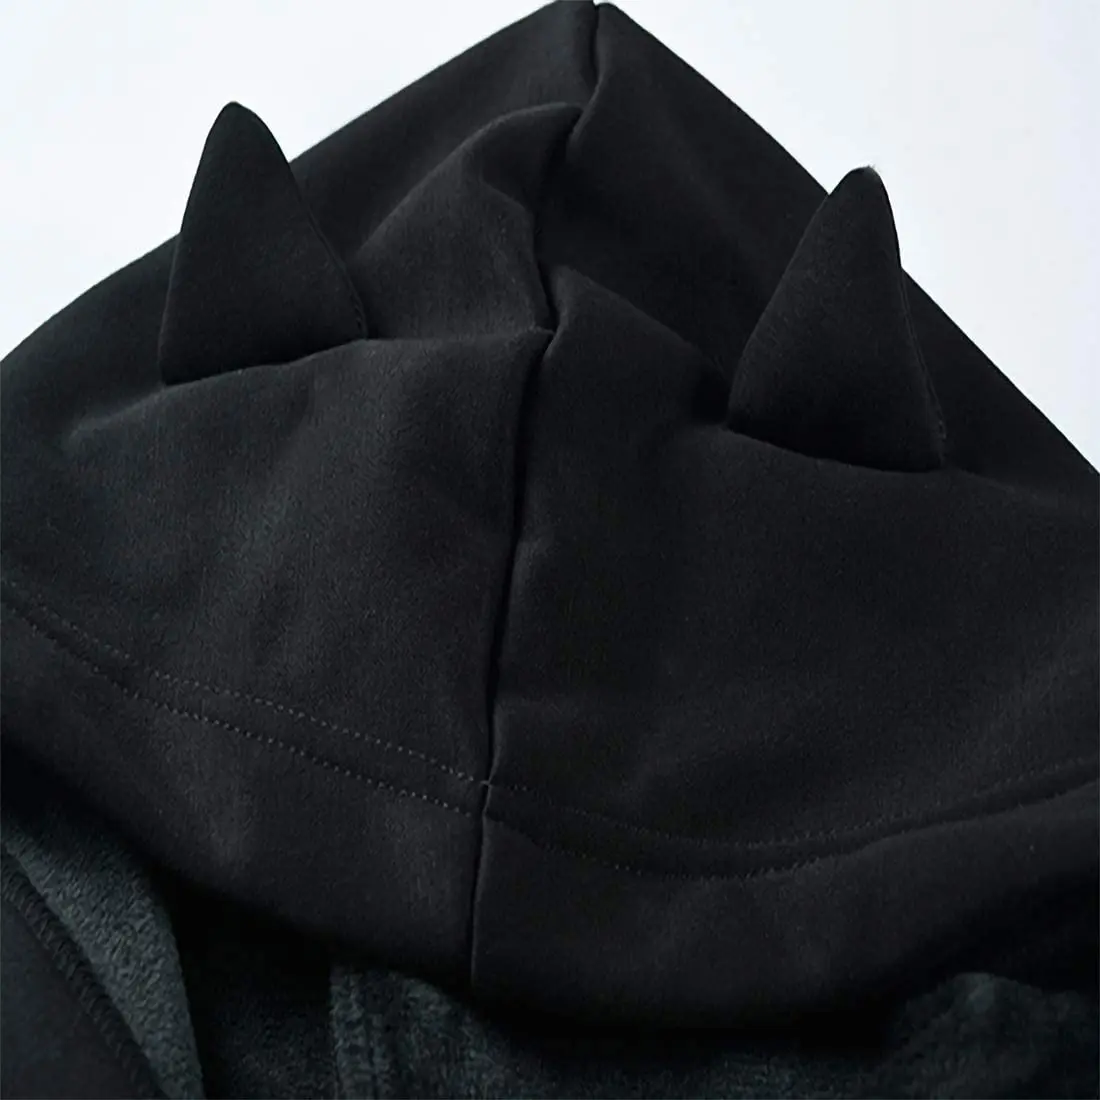 black color cat hoodie with ears